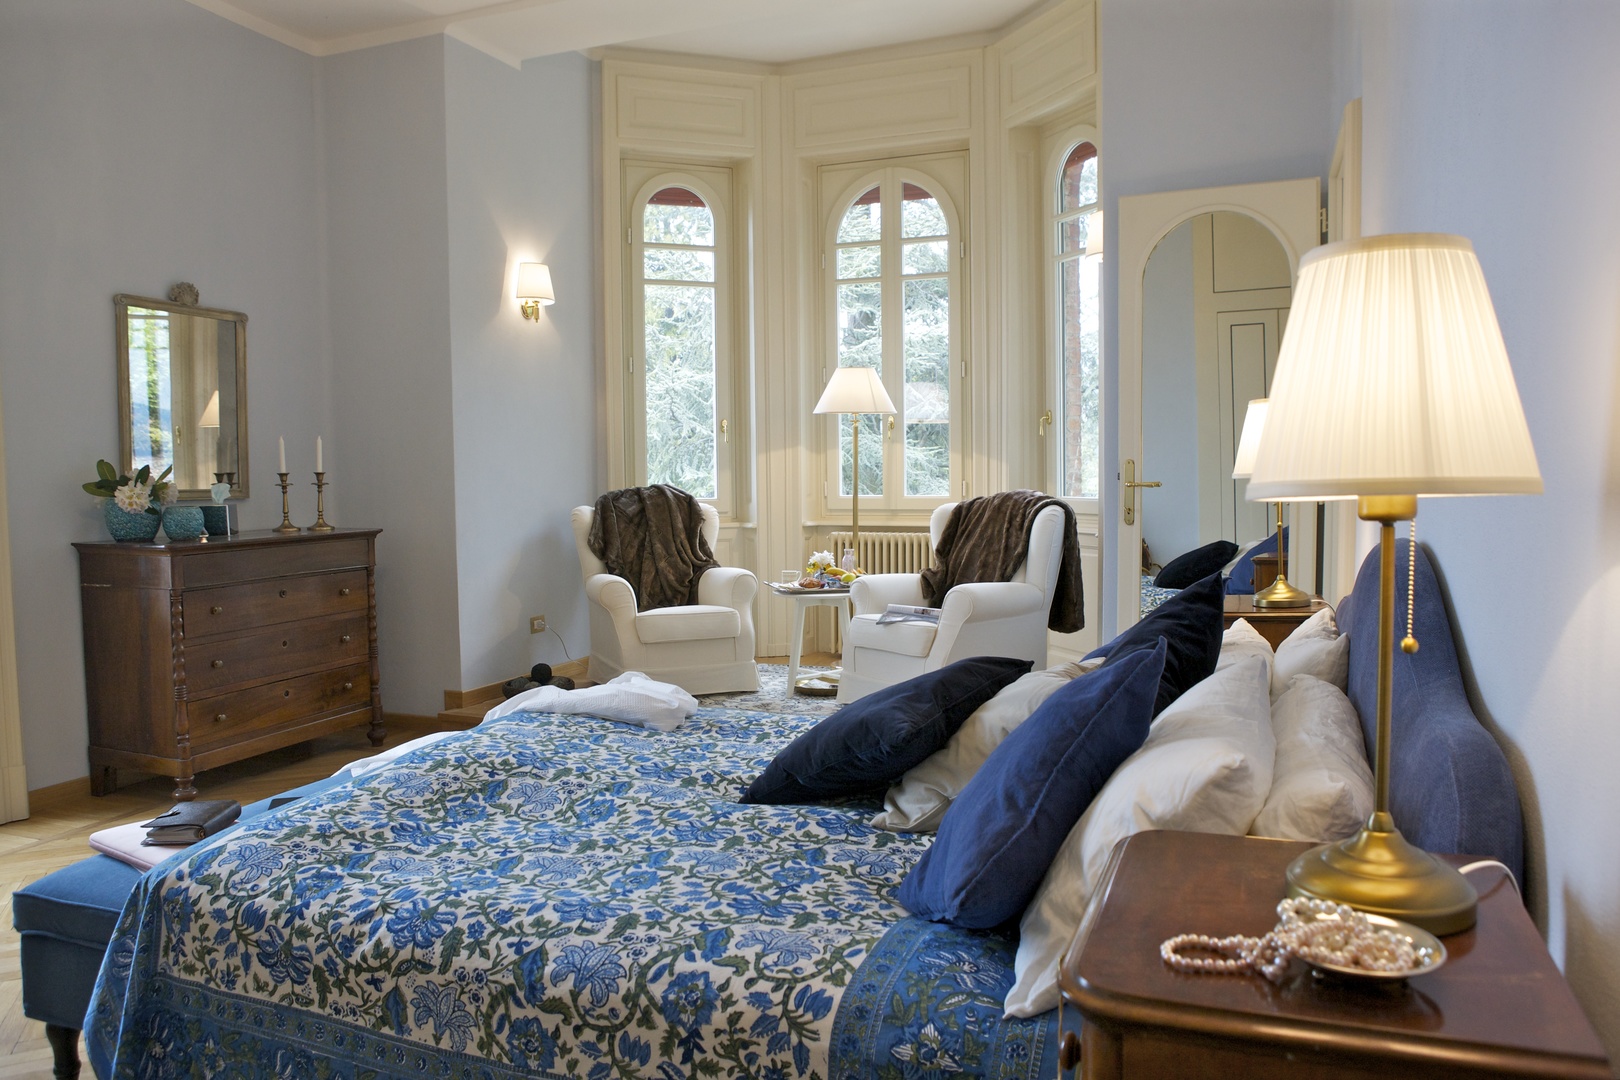 Villa Confalonieri provides comfortable beds